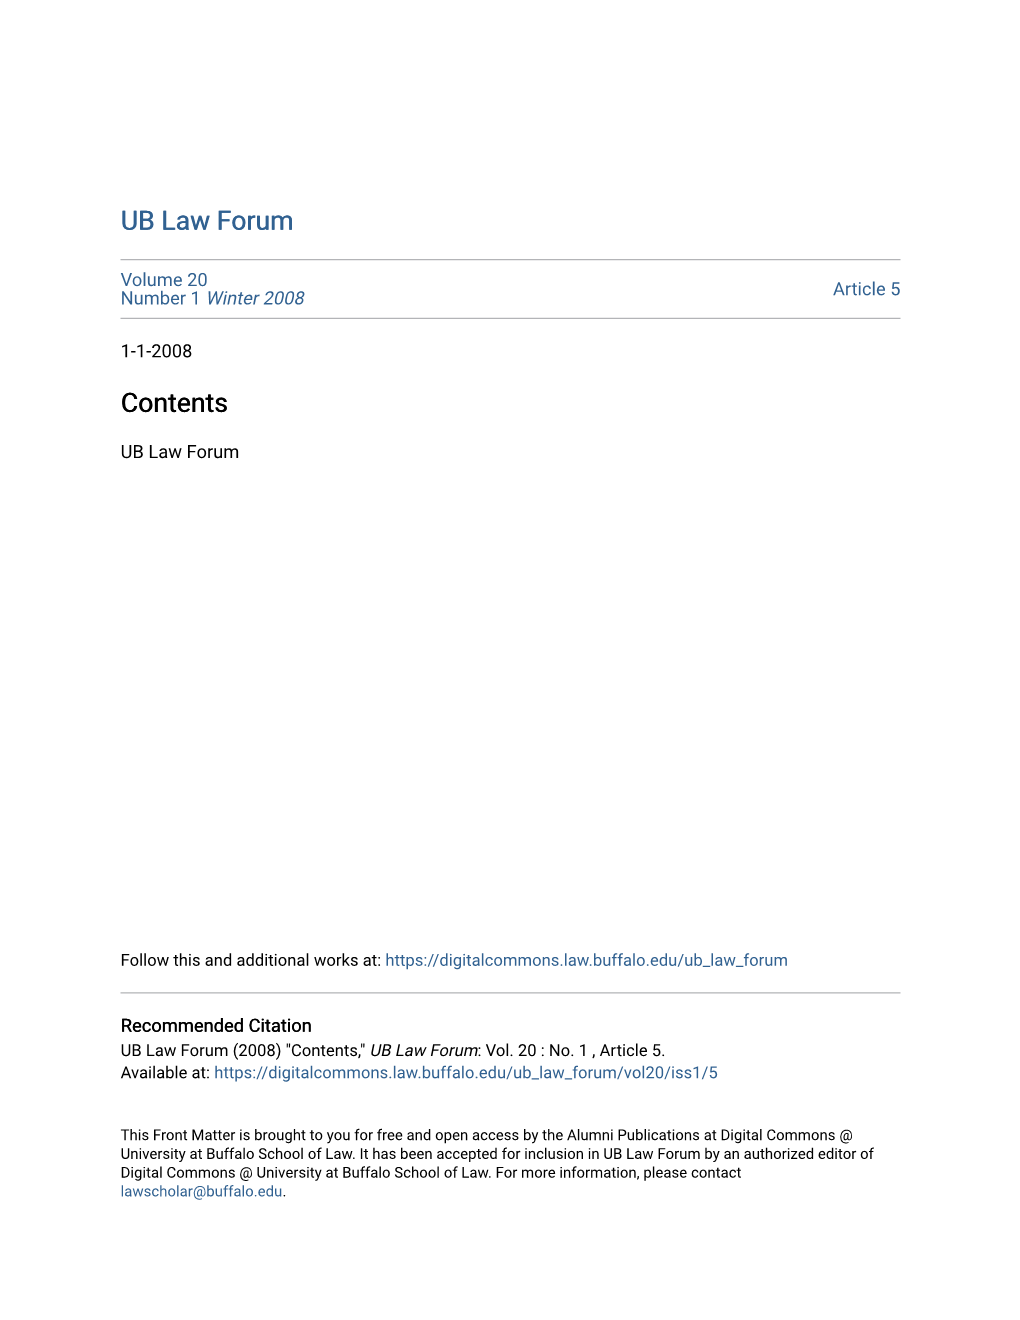 UB Law Forum Contents